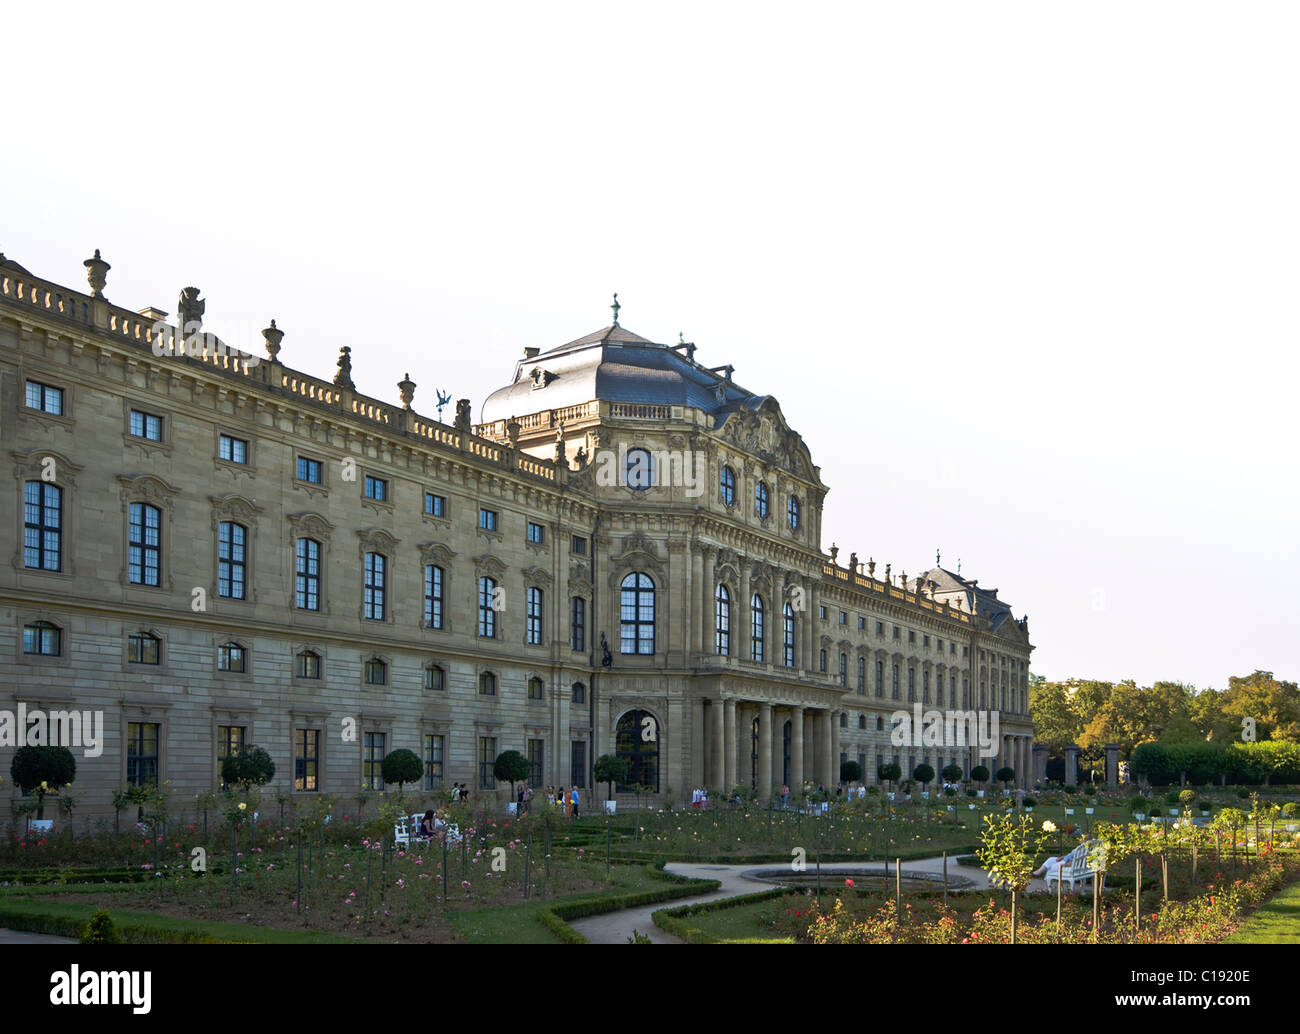 Würzburg Residence Palace in Germany Stock Photo - Alamy